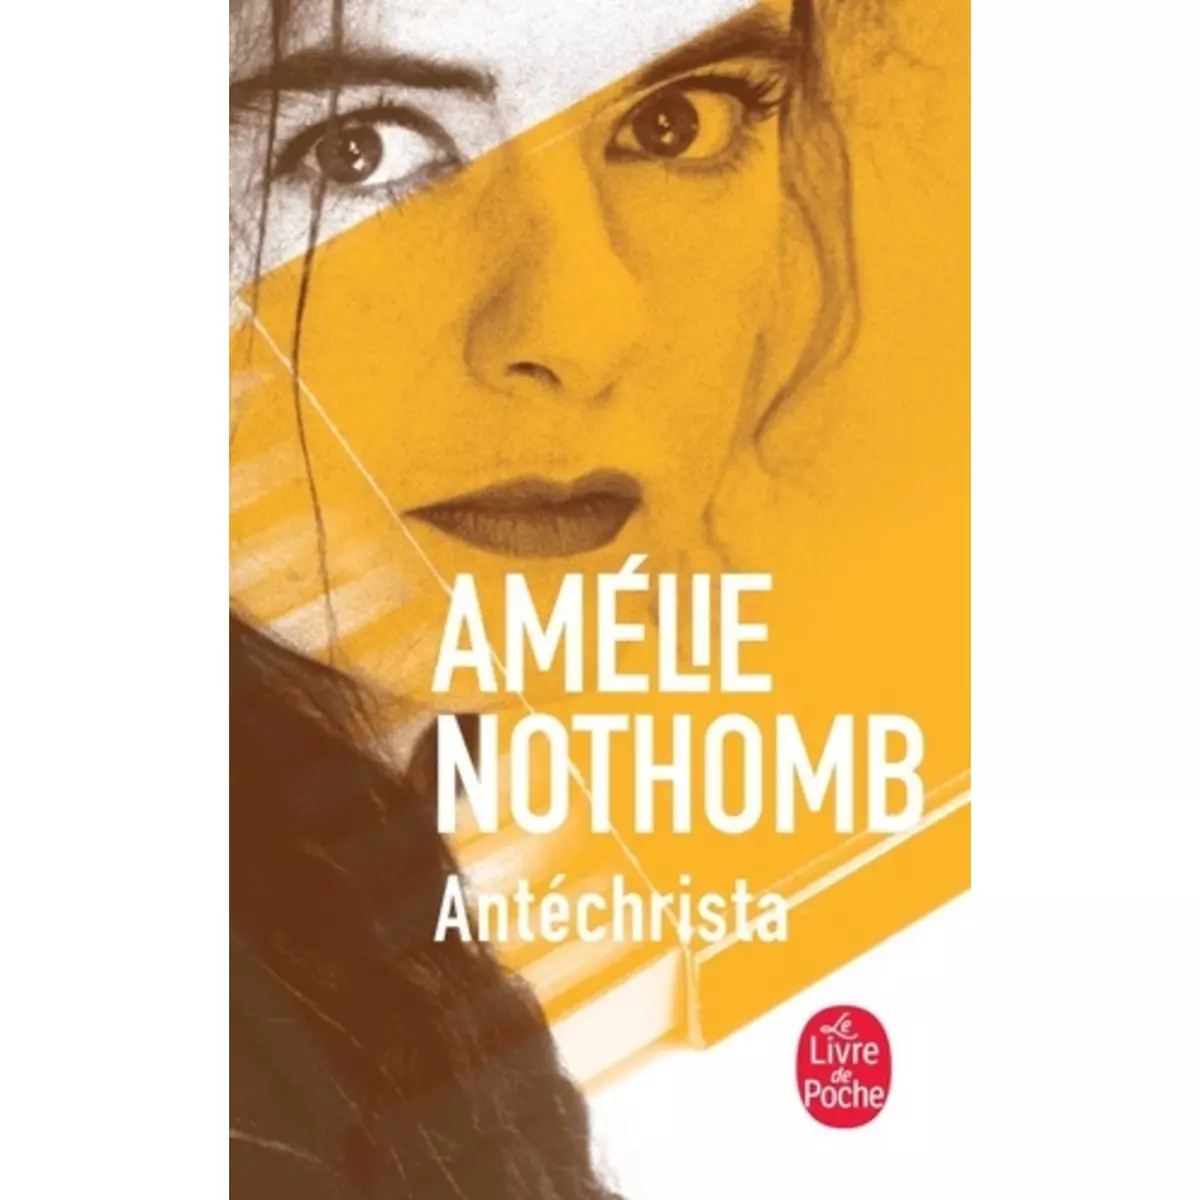  ANTECHRISTA, Nothomb Amélie